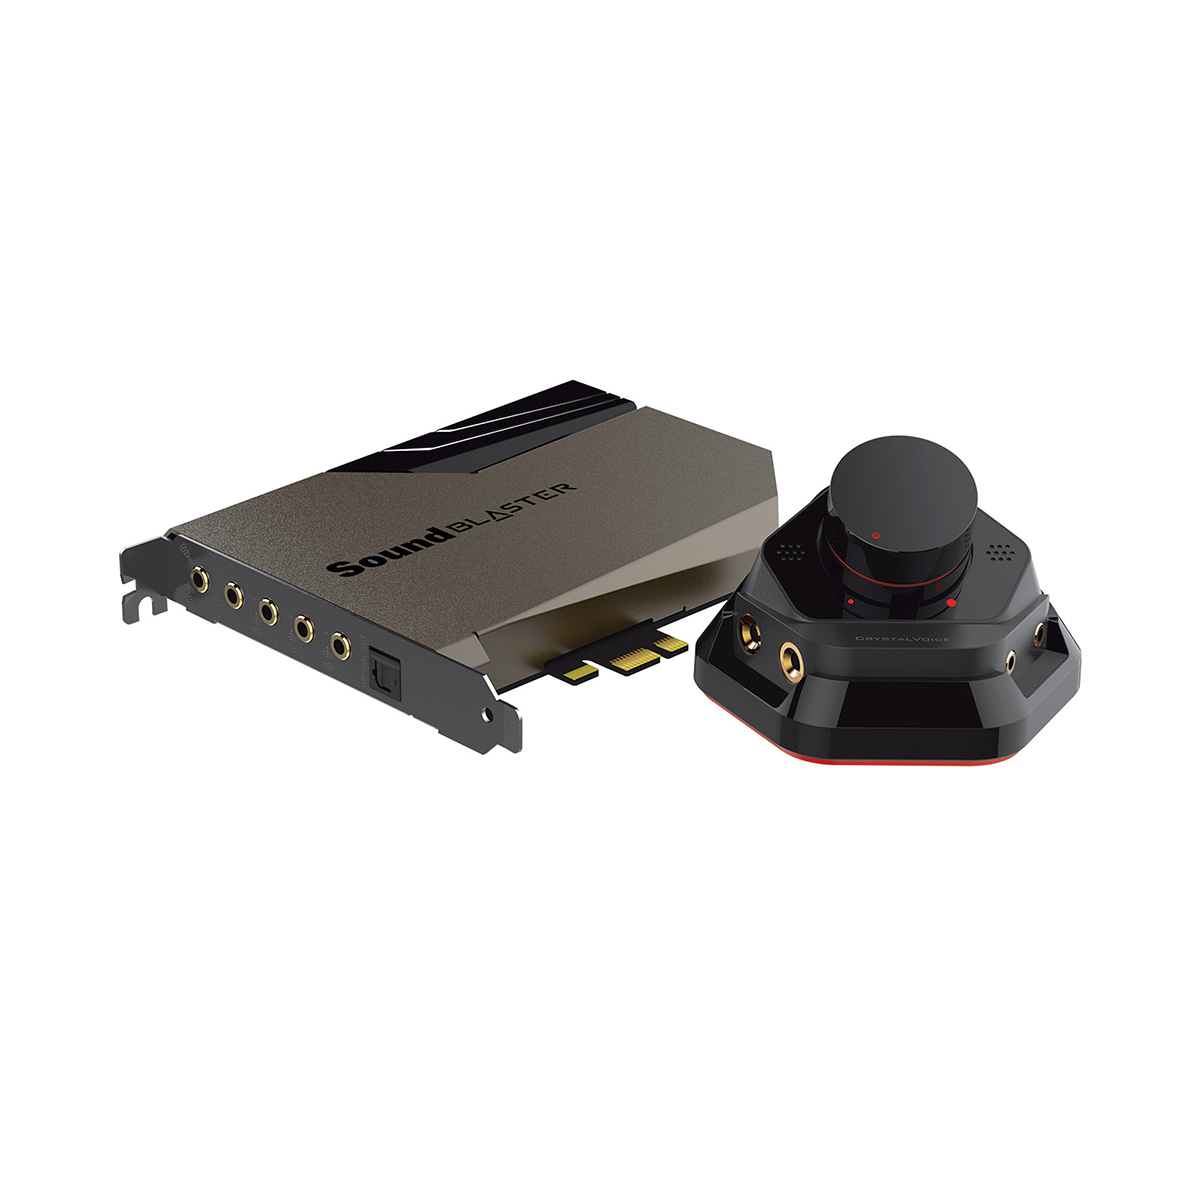 Creative Sound Blaster AE-7 Hi-res PCI-e DAC and Amp Sound Card with Xamp Discrete Headphone Bi-amp and Audio Control Module